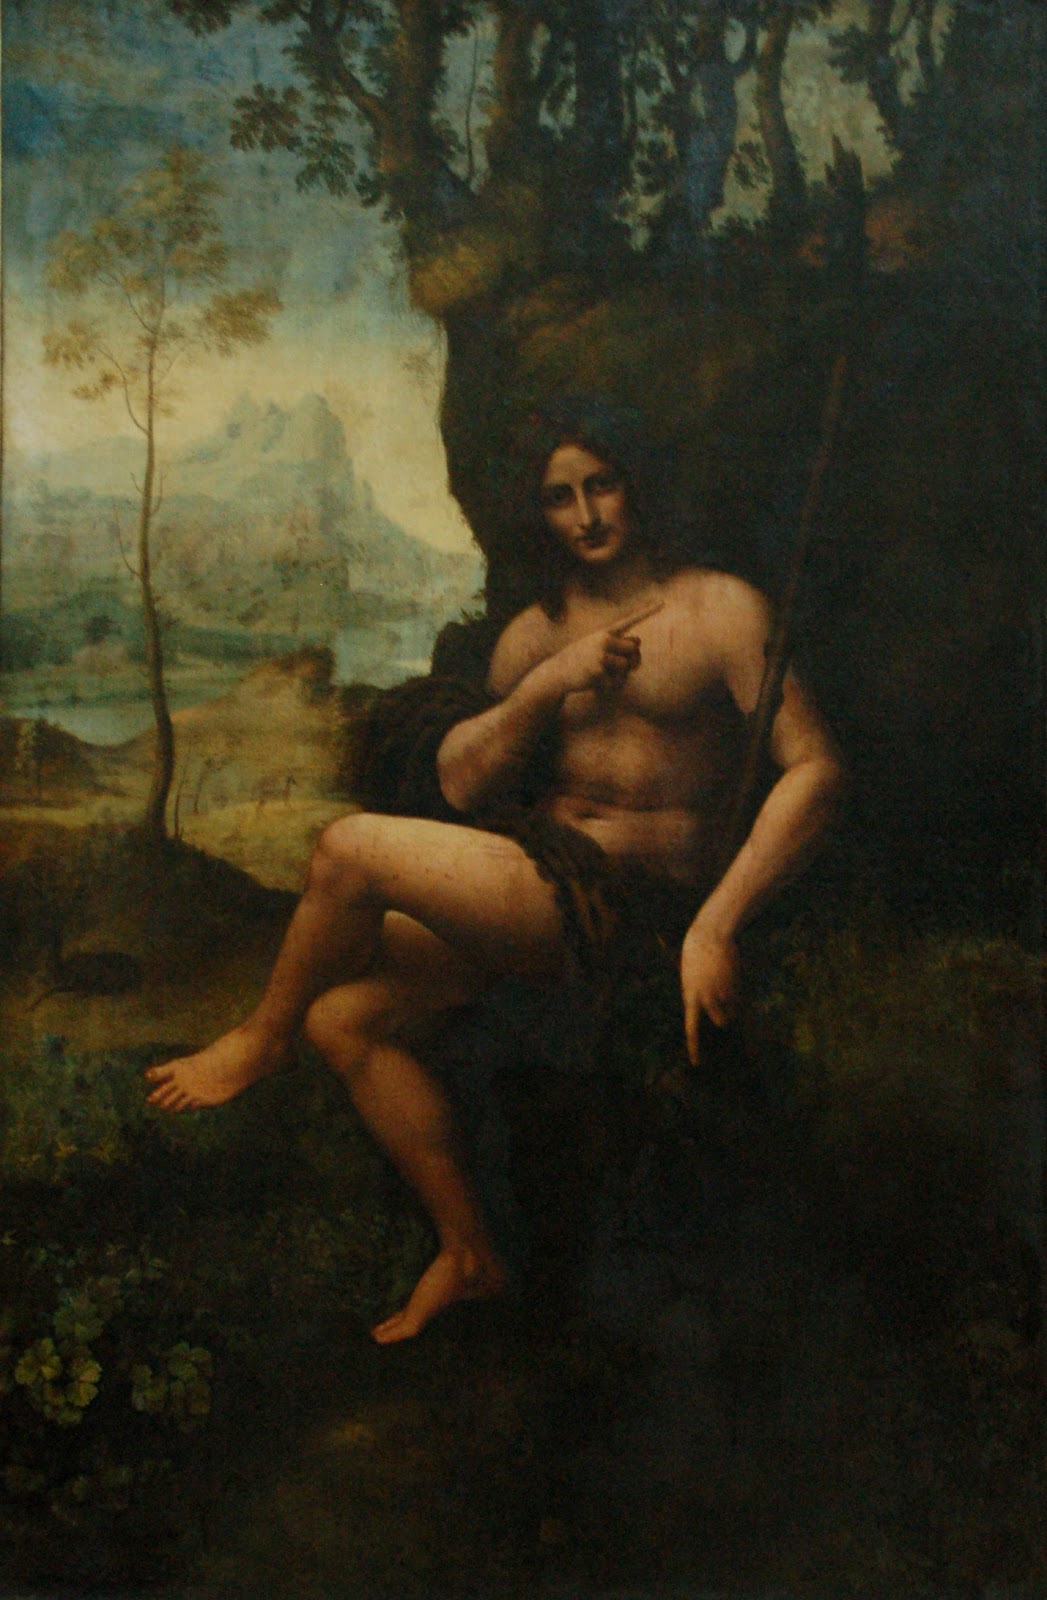 Leonardo+da+Vinci-1452-1519 (853).jpg